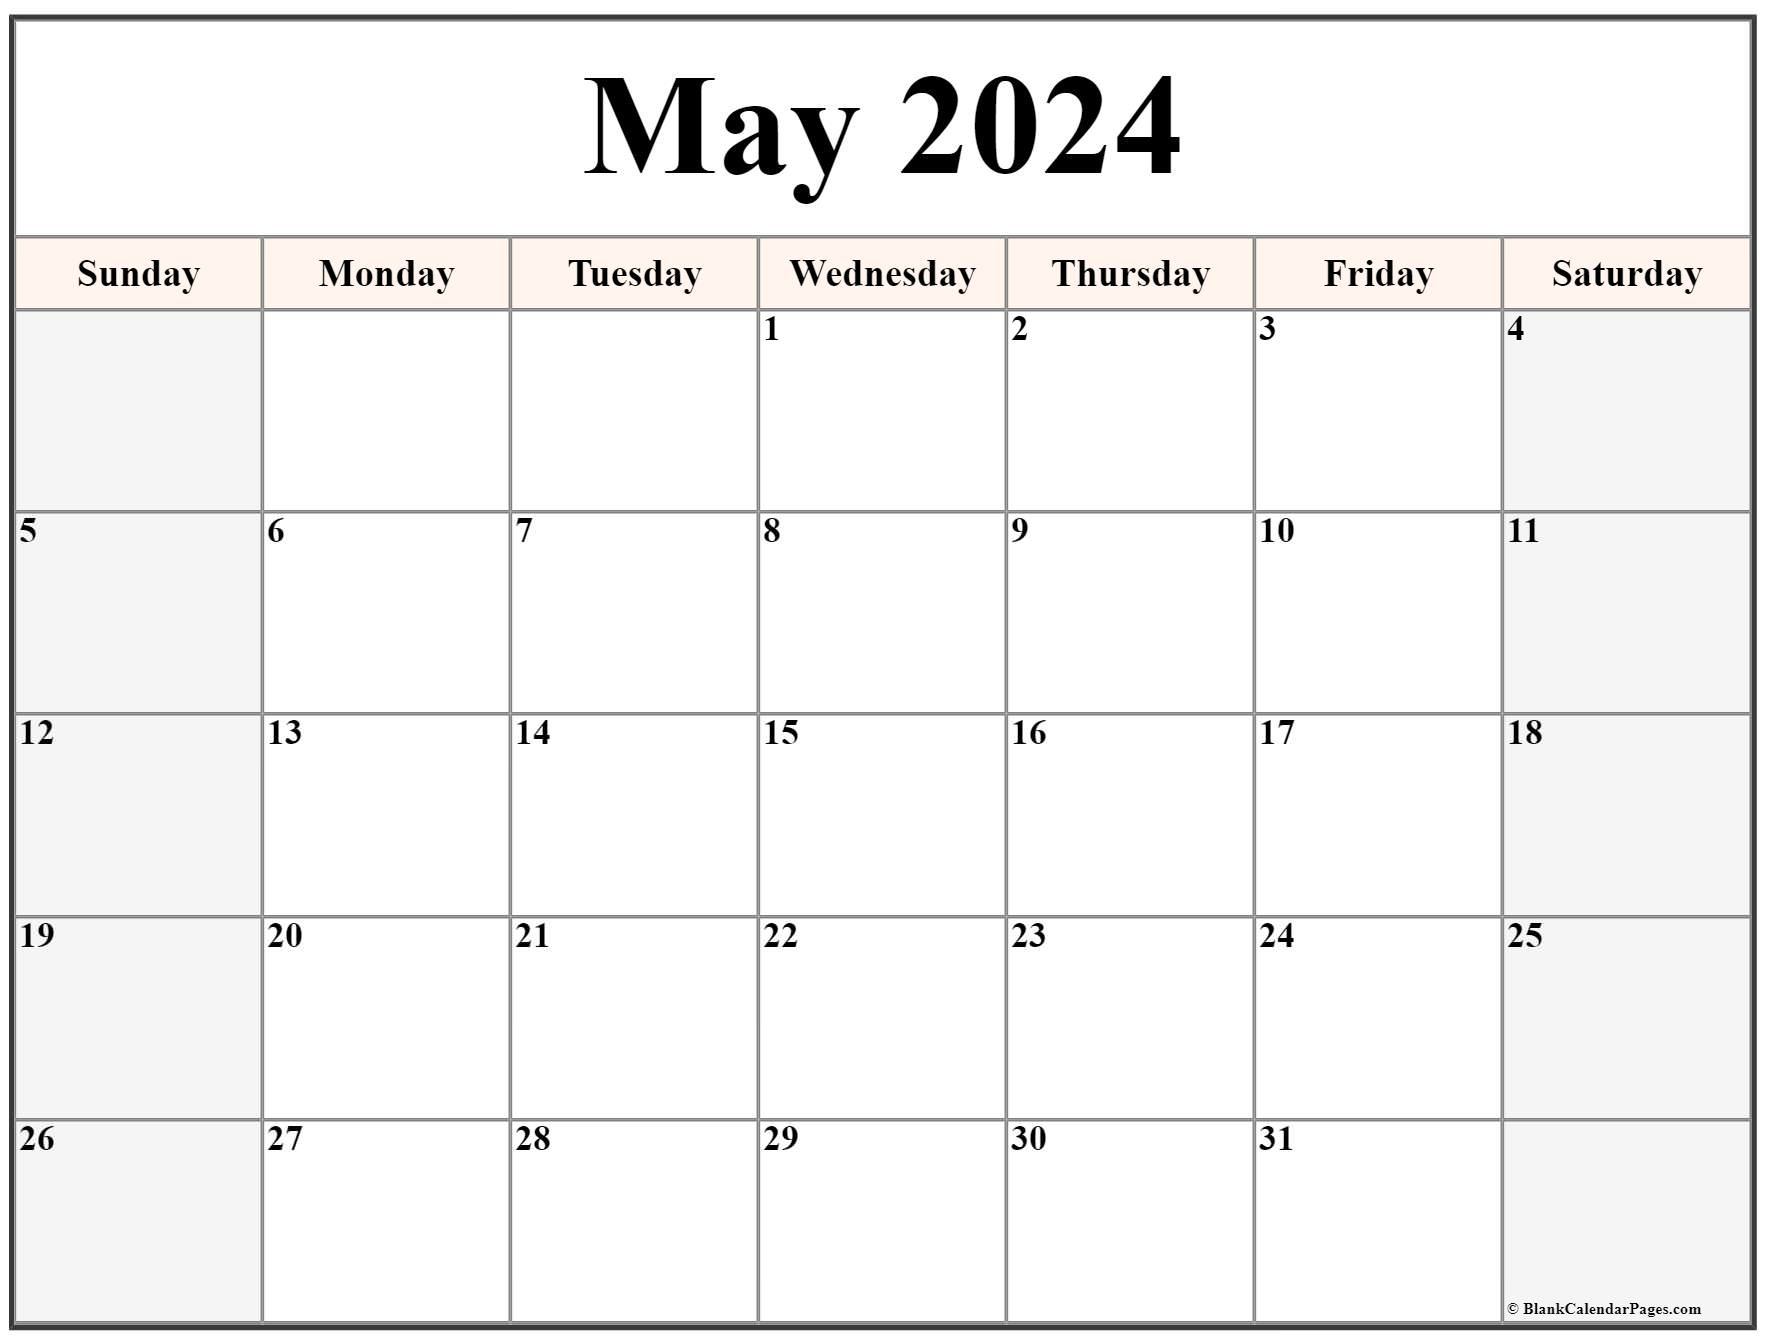 May 2024 Calendar | Free Printable Calendar | Calendar 2024